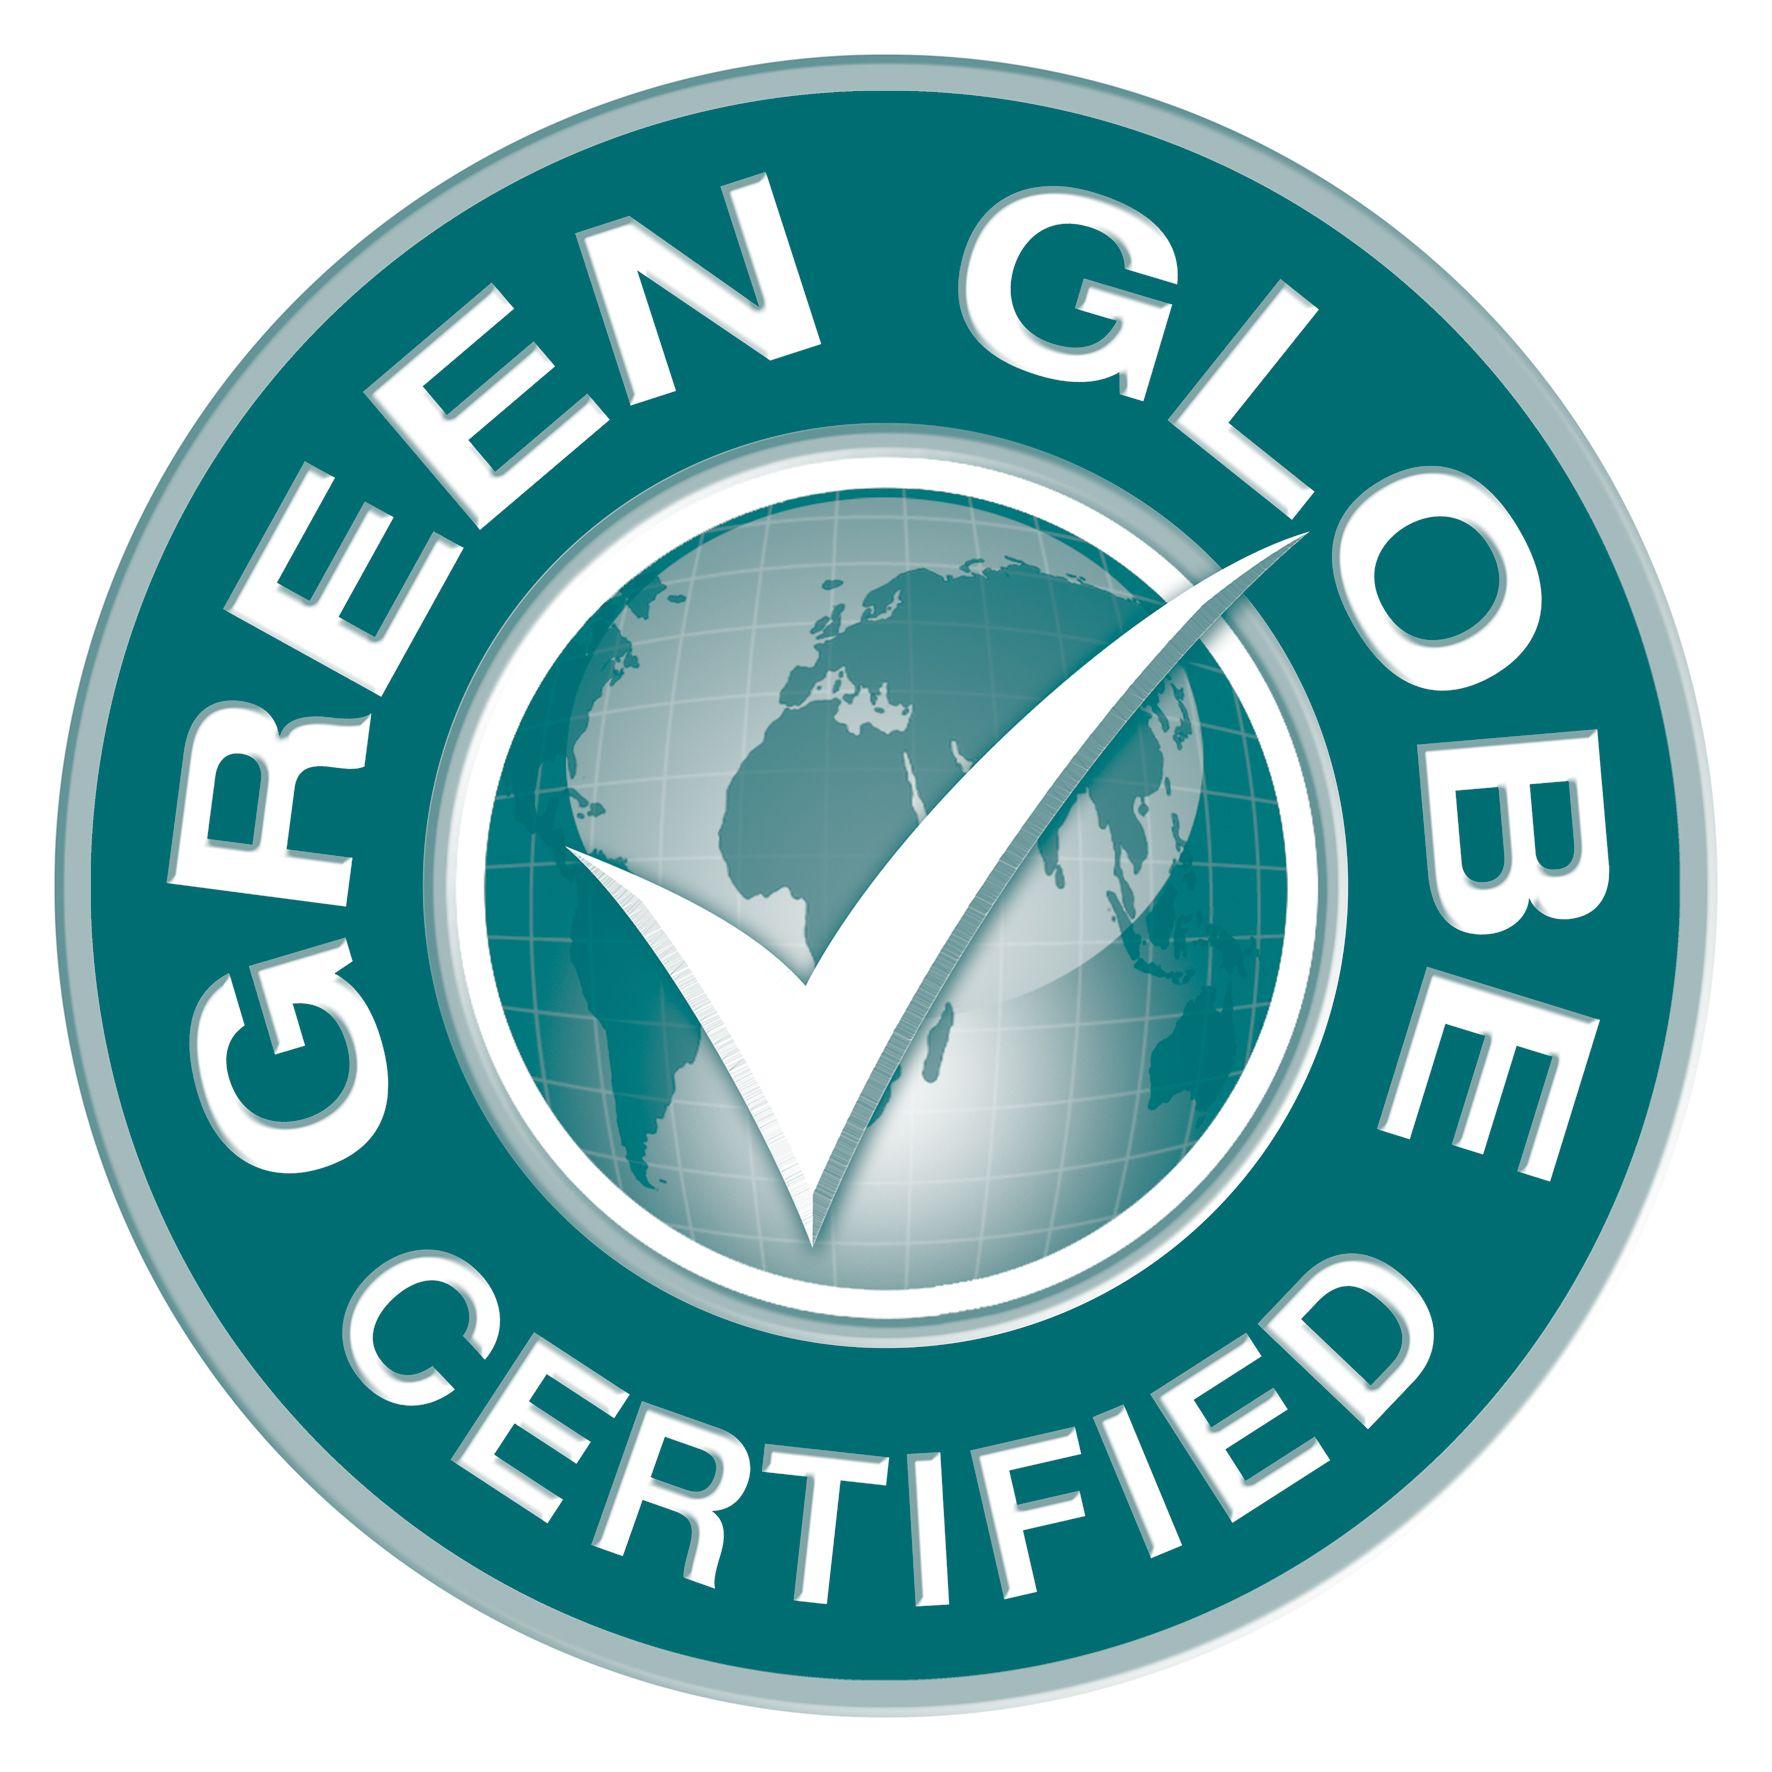 Green Globe Logo - Jamaica Inn is Green Globe certified Inn Blog